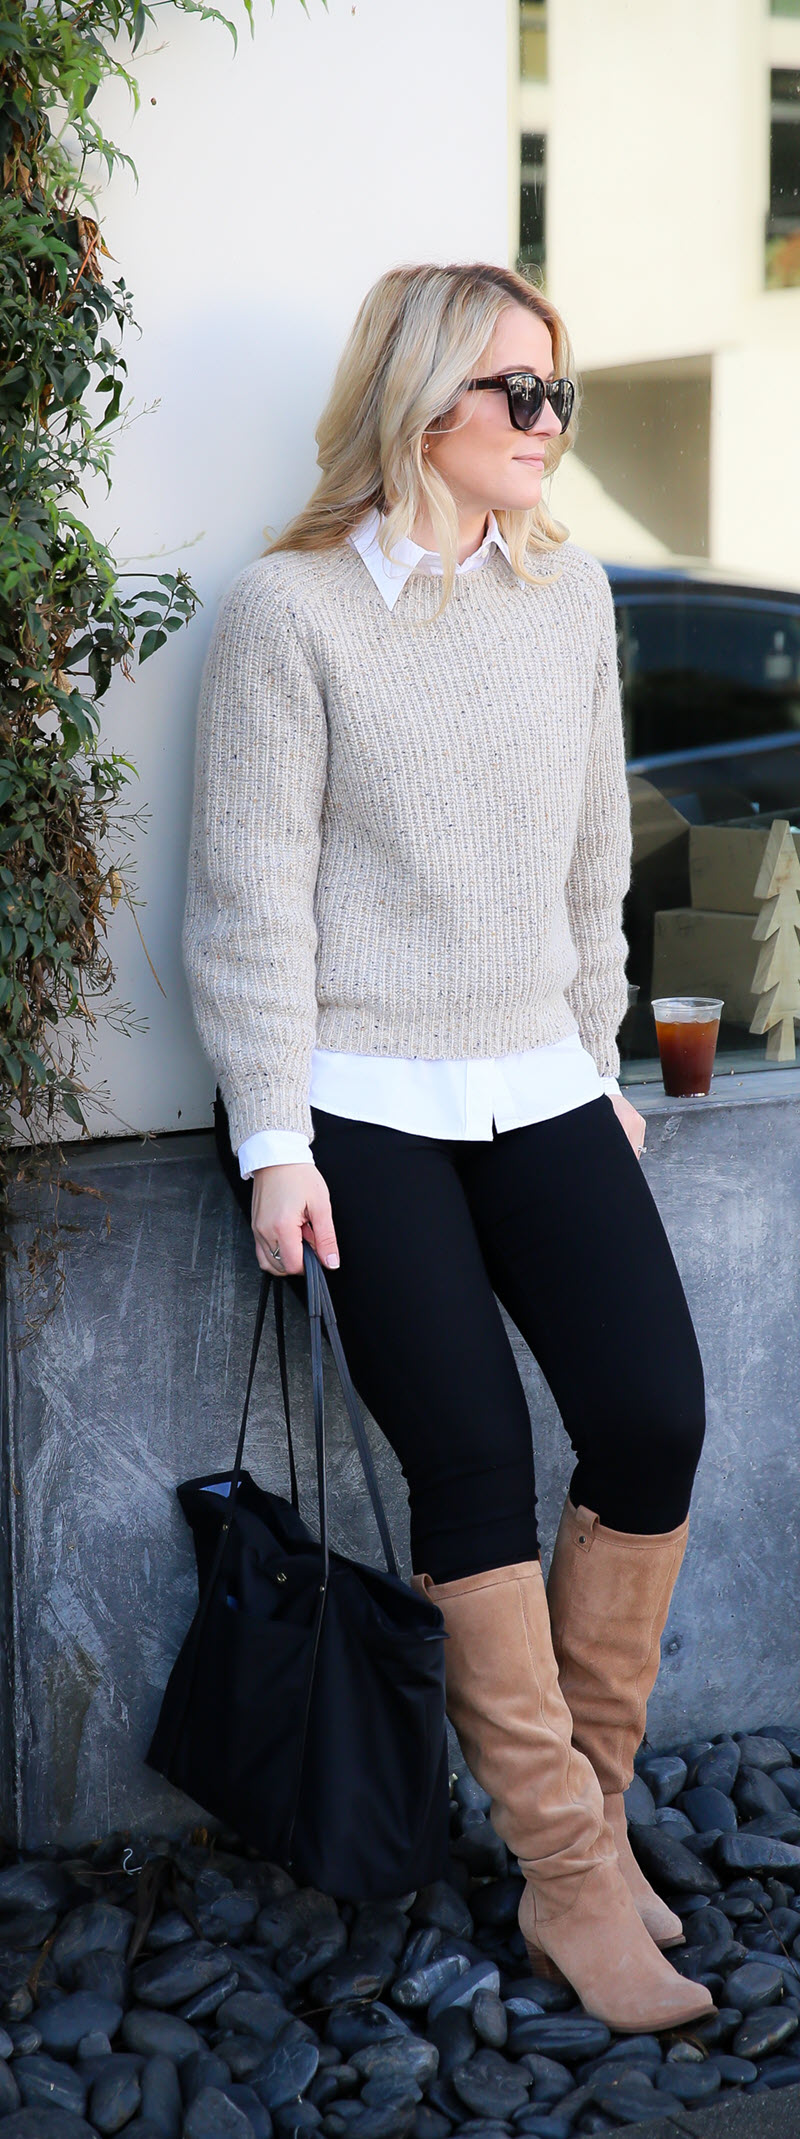 How to Layer Cashmere + Wool Sweaters #fashion #winterstyle #fashionstyle #style #fashionblog #fashionblogger #styleblog #womensfashion #womenover30 #abbotkinney #losangeles